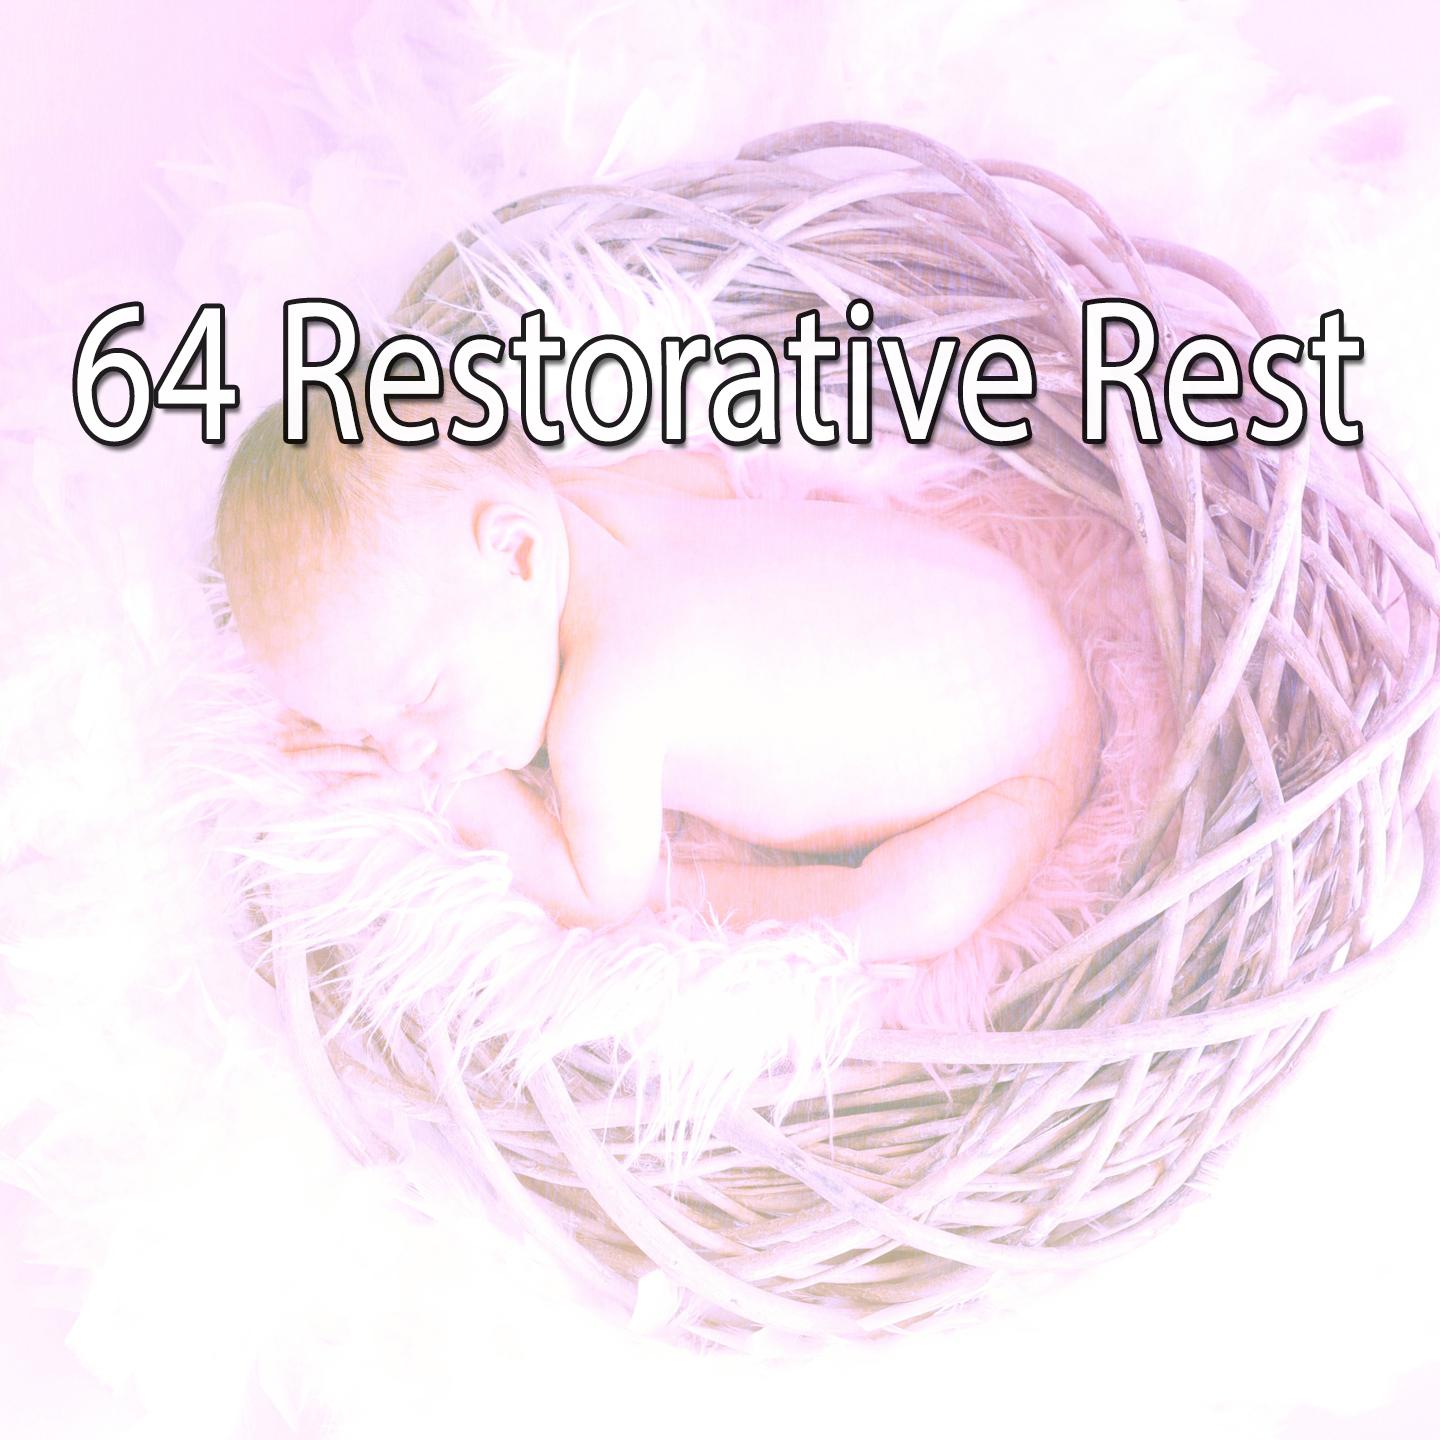 64 Restorative Rest